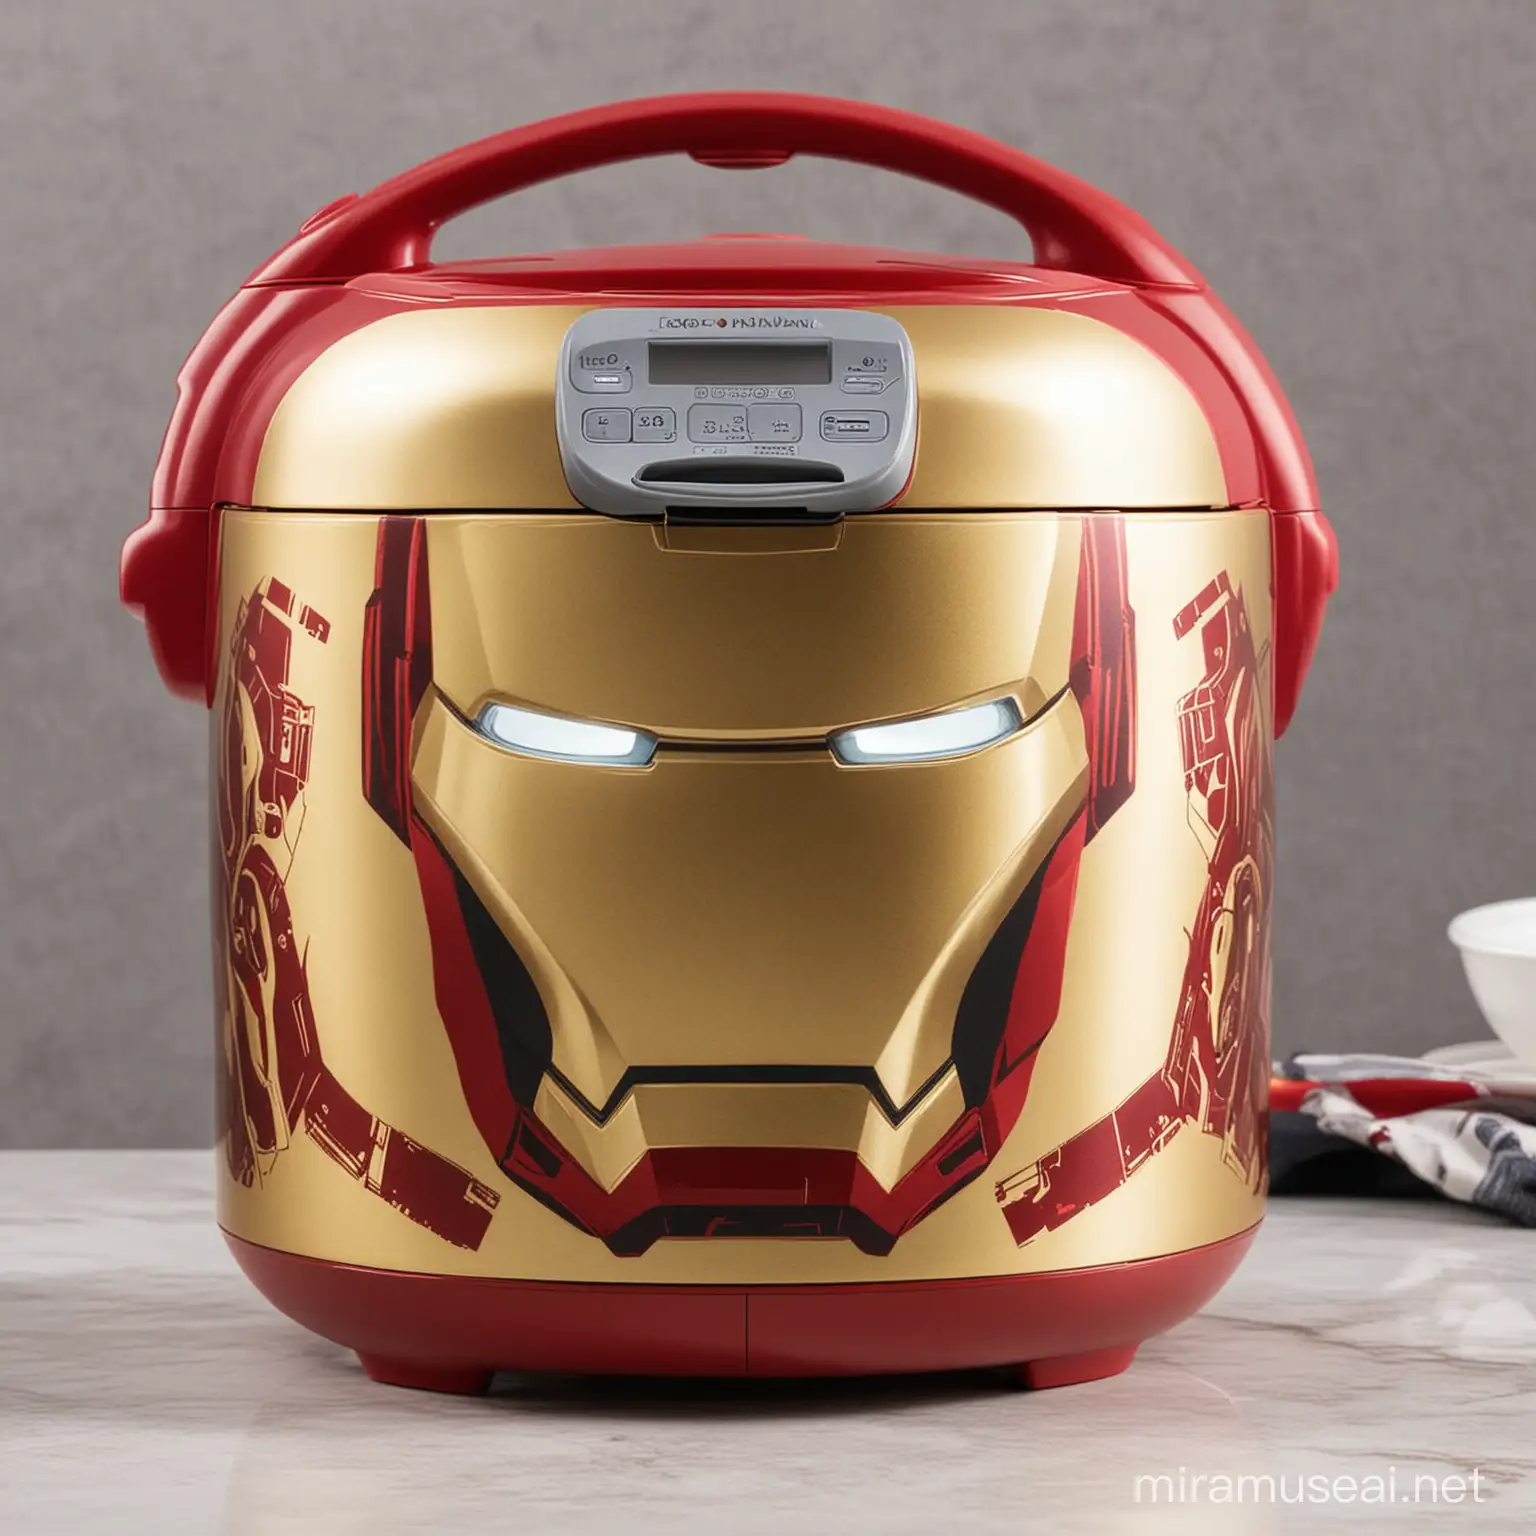 Iron Man Patterned Rice Cooker Marvelthemed Kitchen Appliance